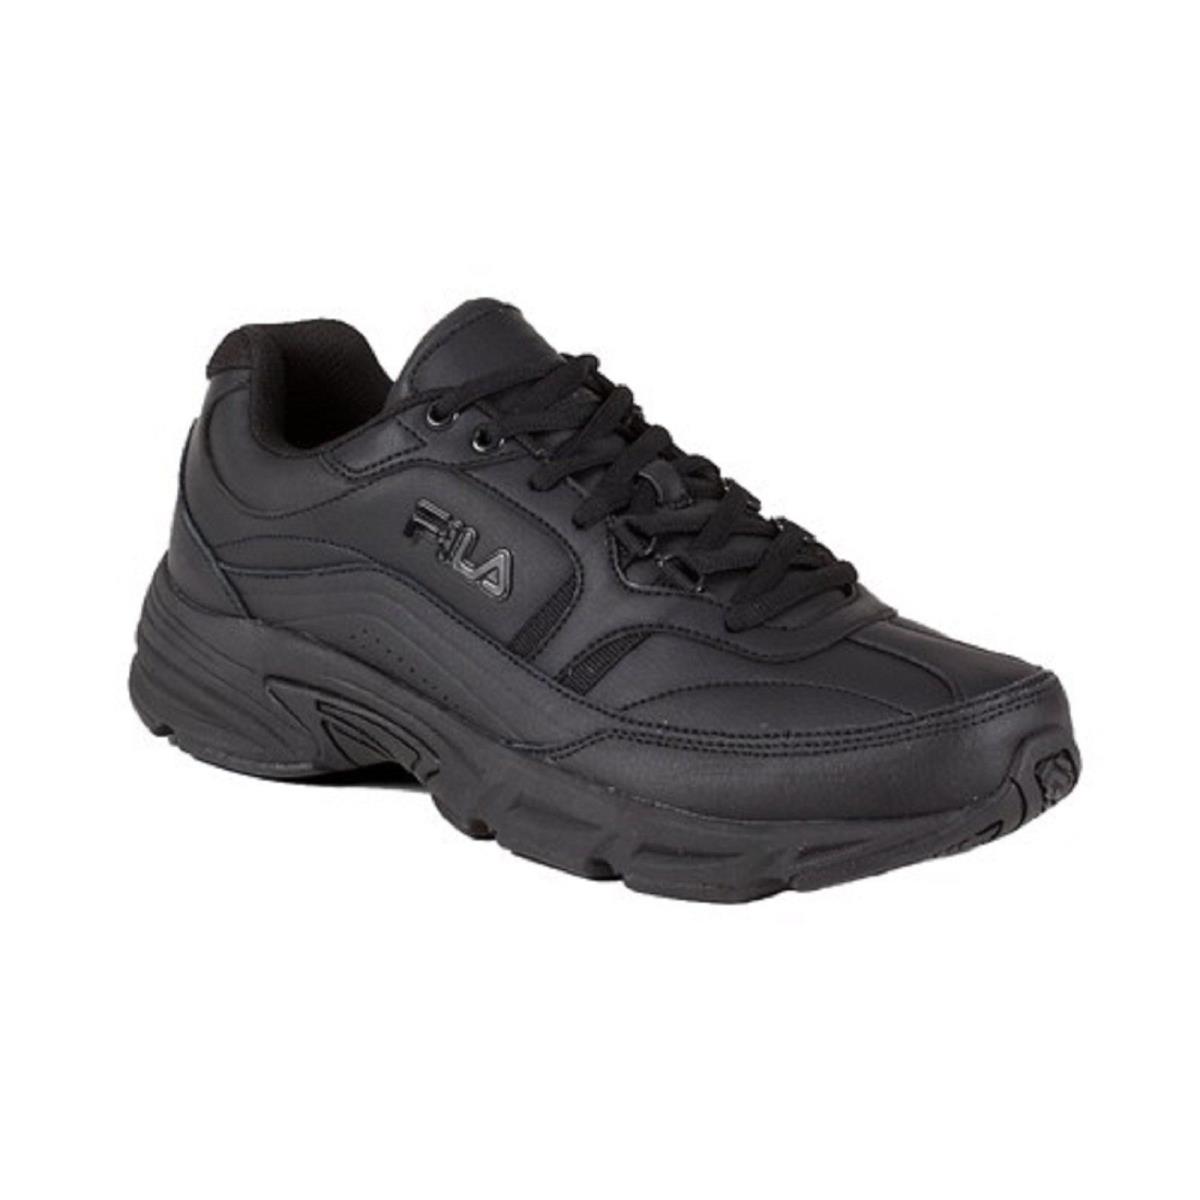 Fila Mens Memory Foam Workshift Slip-resistant Black Medium Wide Shoes Sneakers